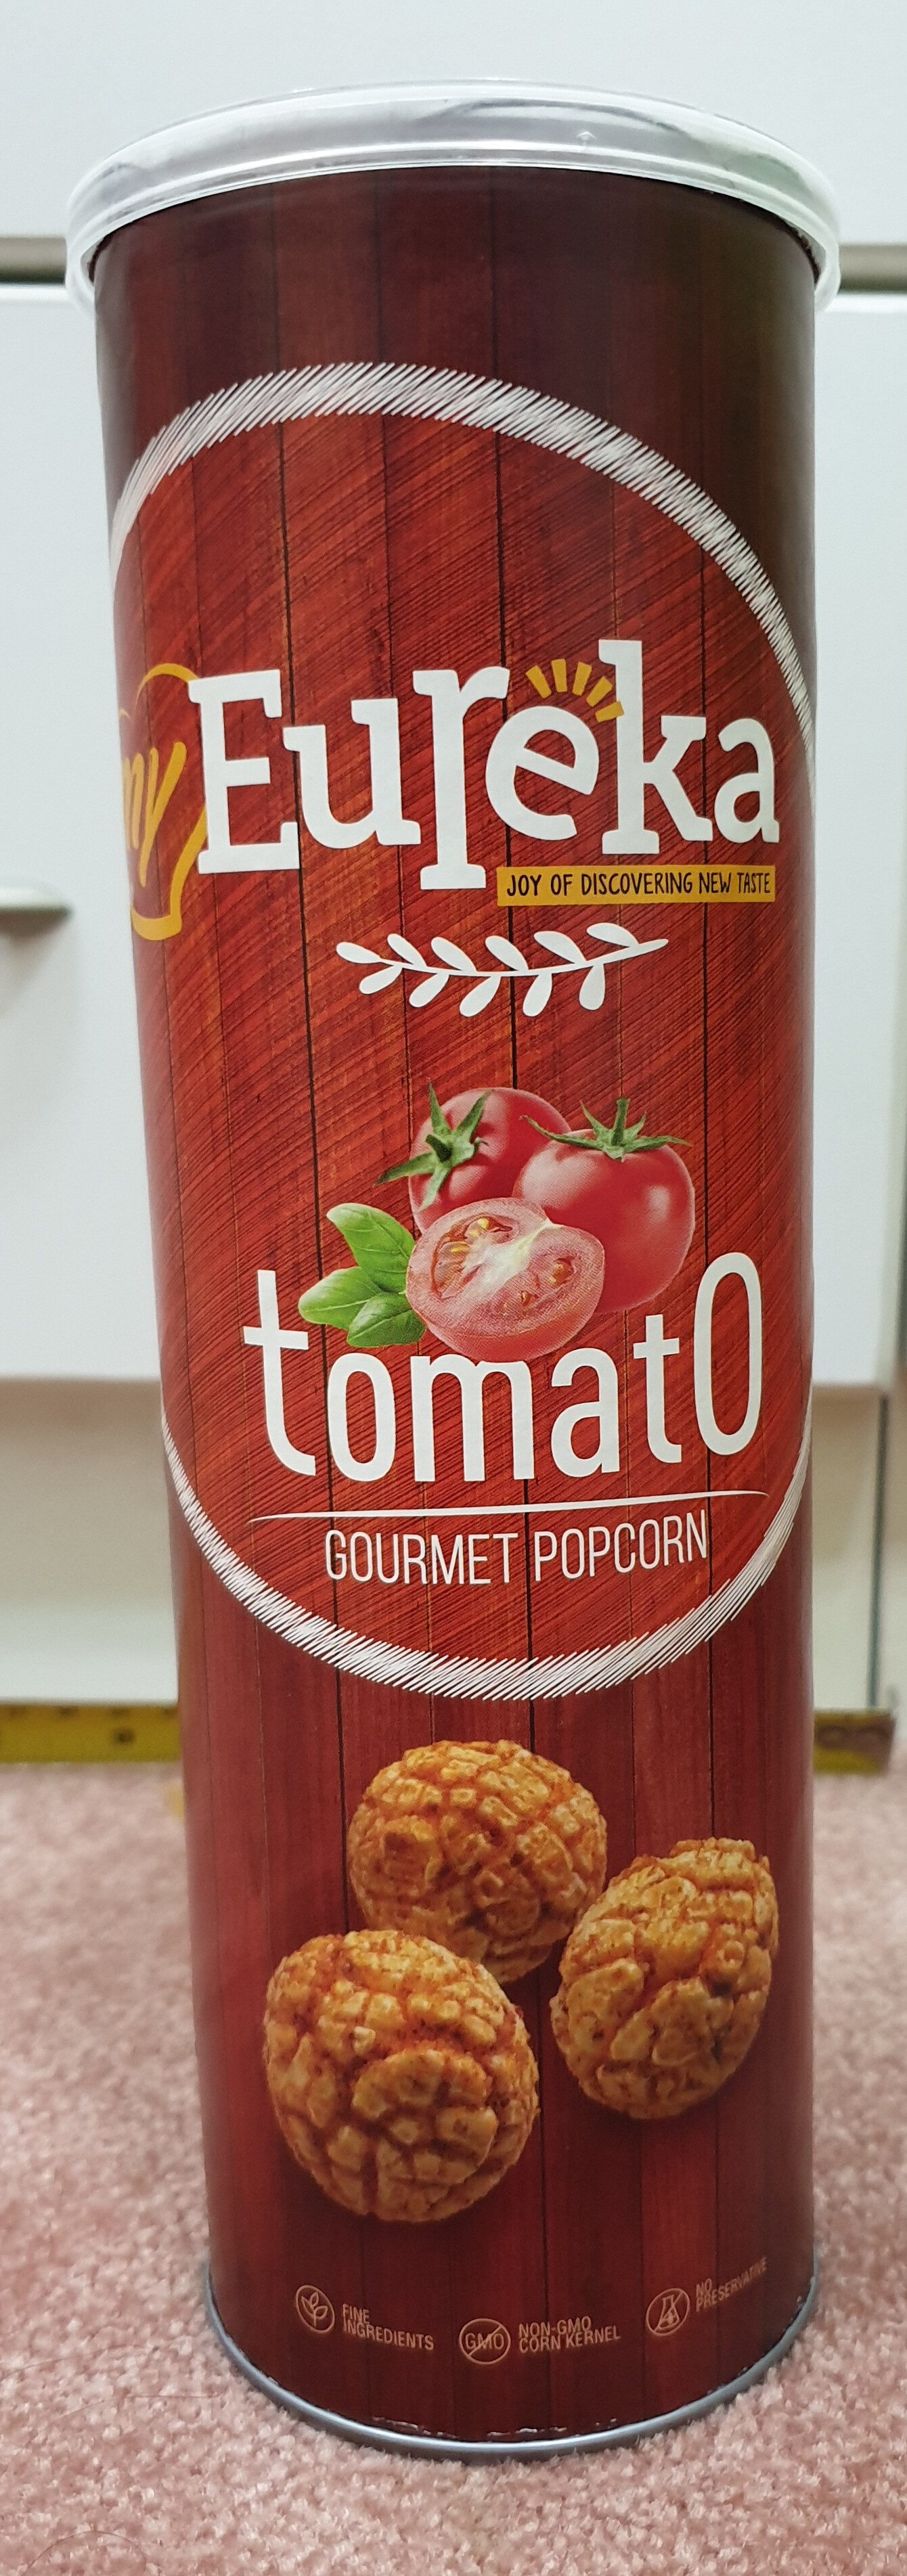 Tomato gourmet popcorn - Product - en